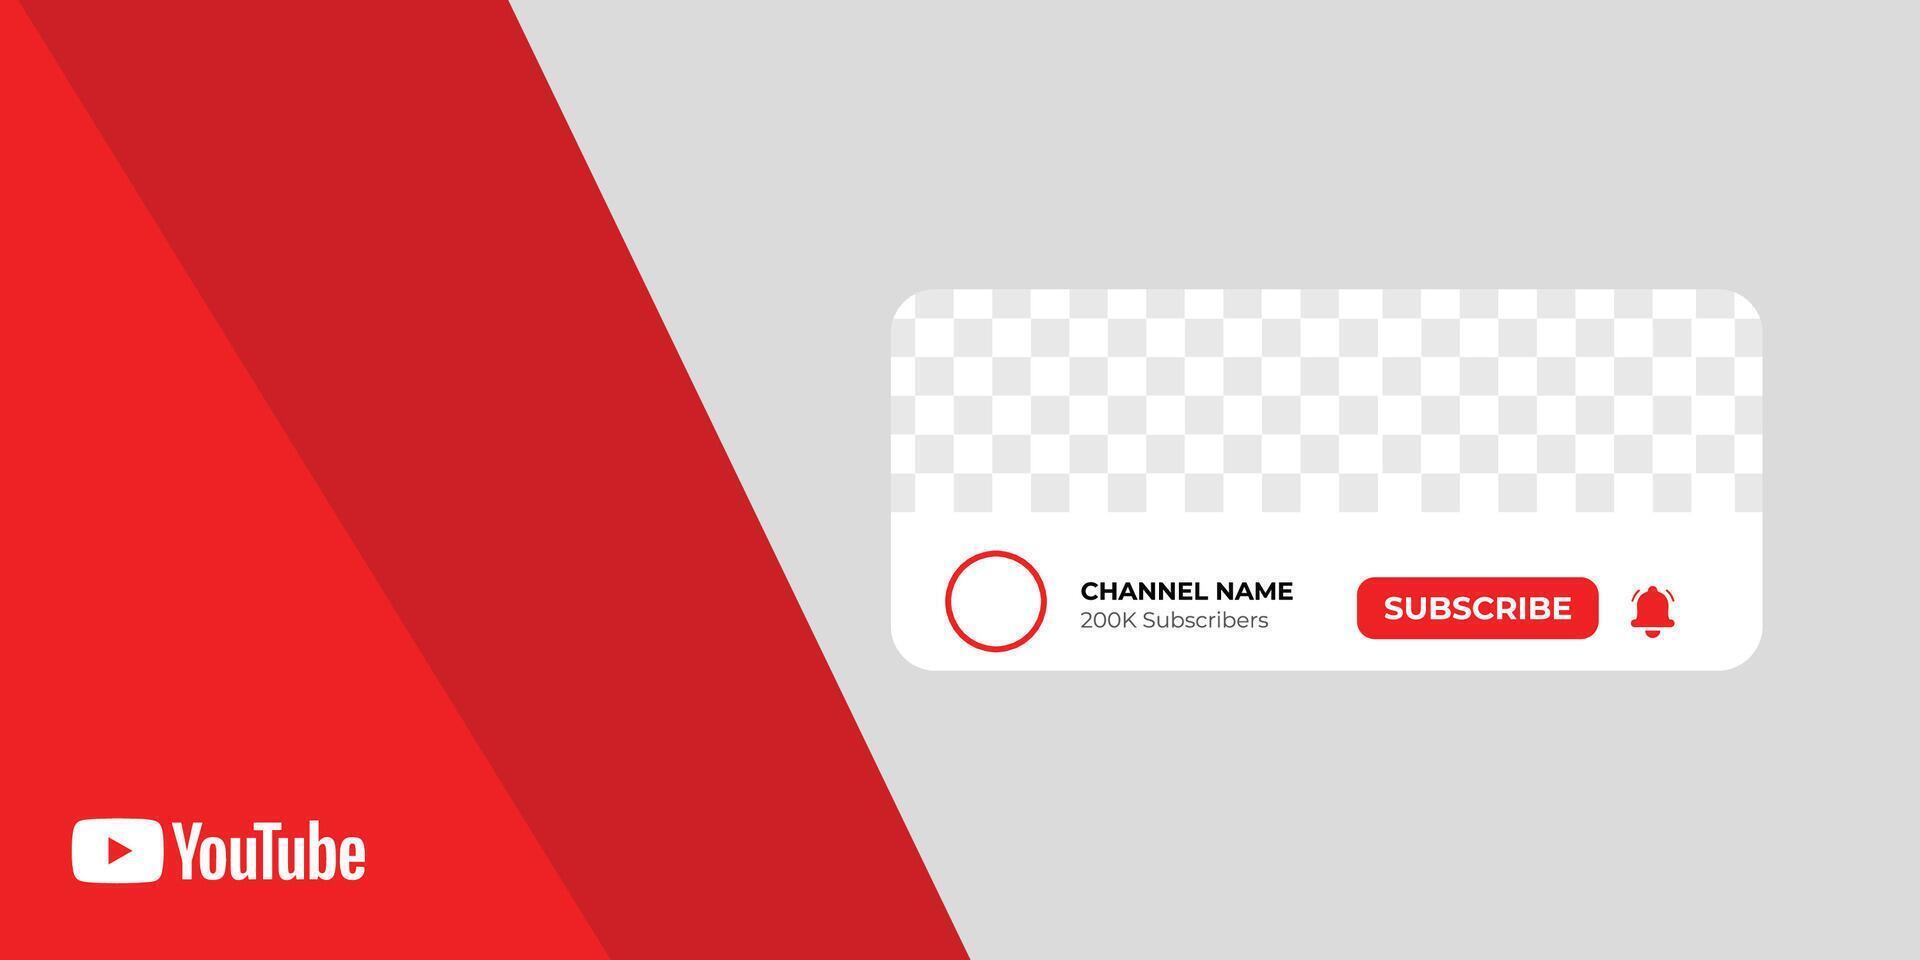 Youtube perfil ícone interface. se inscrever botão. canal nome. vetor